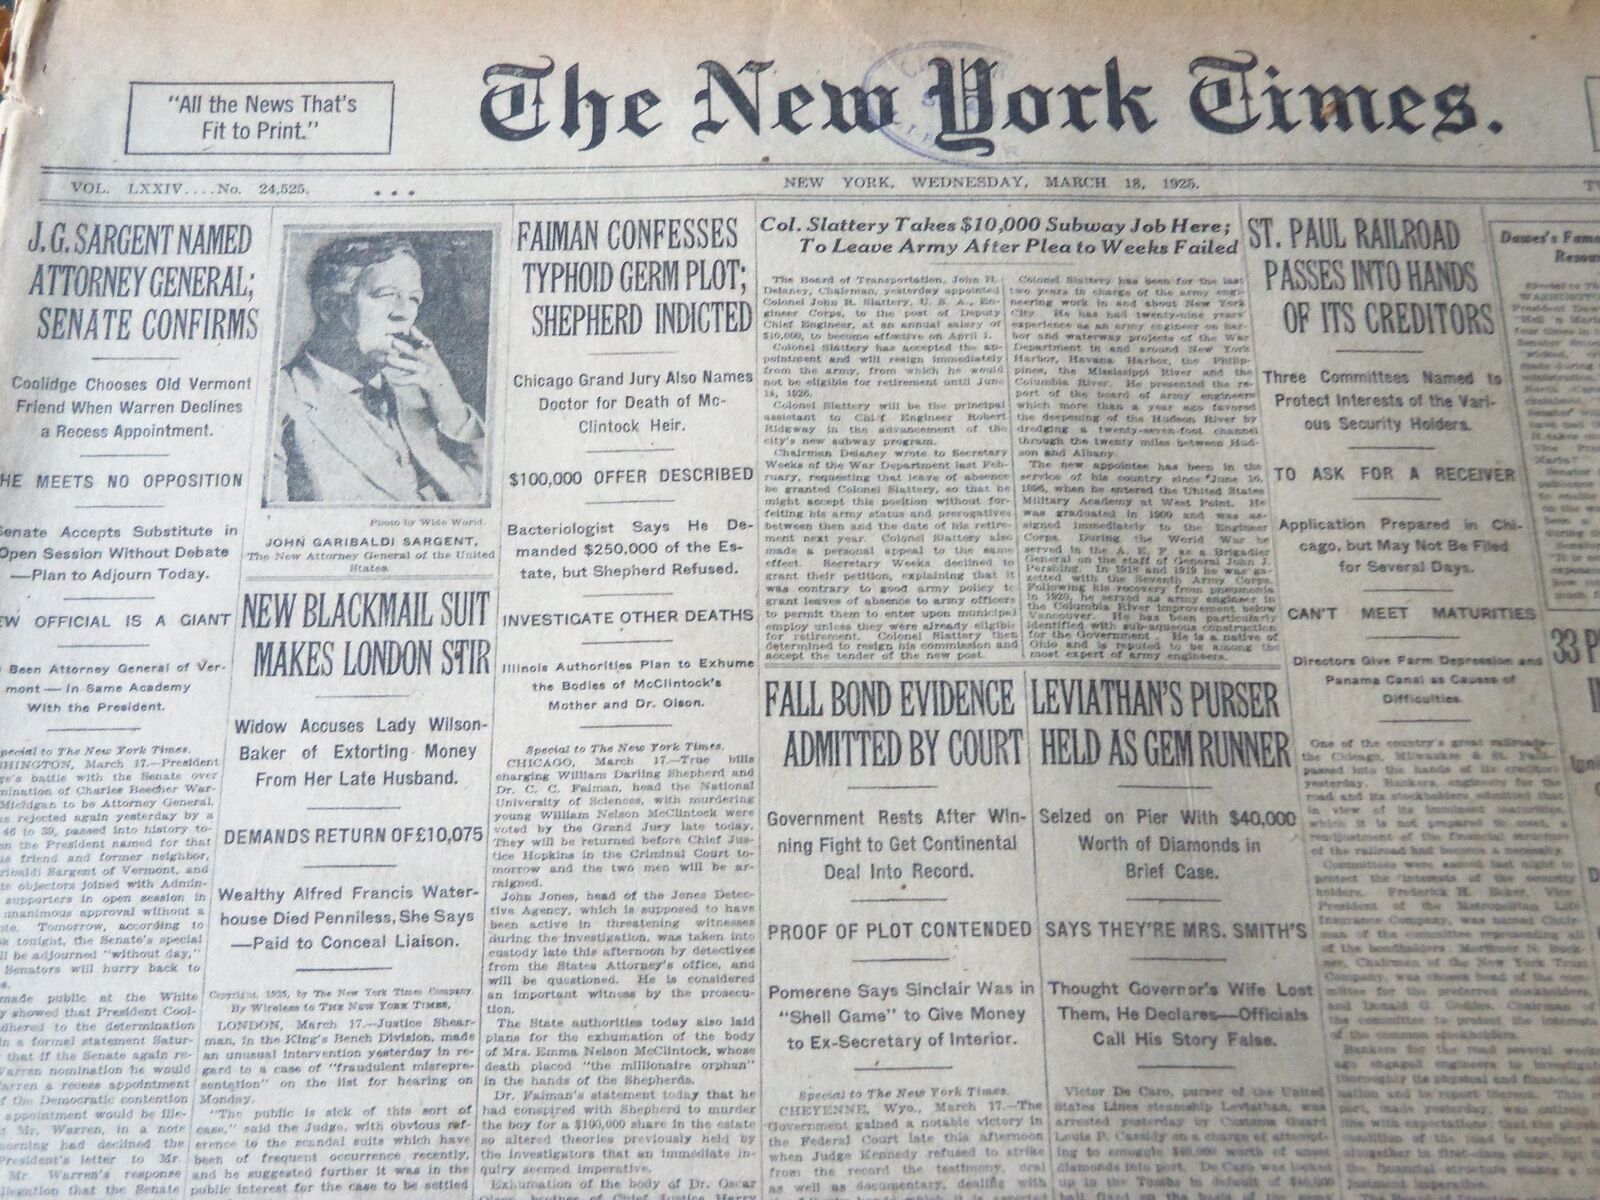 1925 MARCH 18 NEW YORK TIMES - FAIMAN CONFESSES TYPHOID GERM PLOT - NT 7196